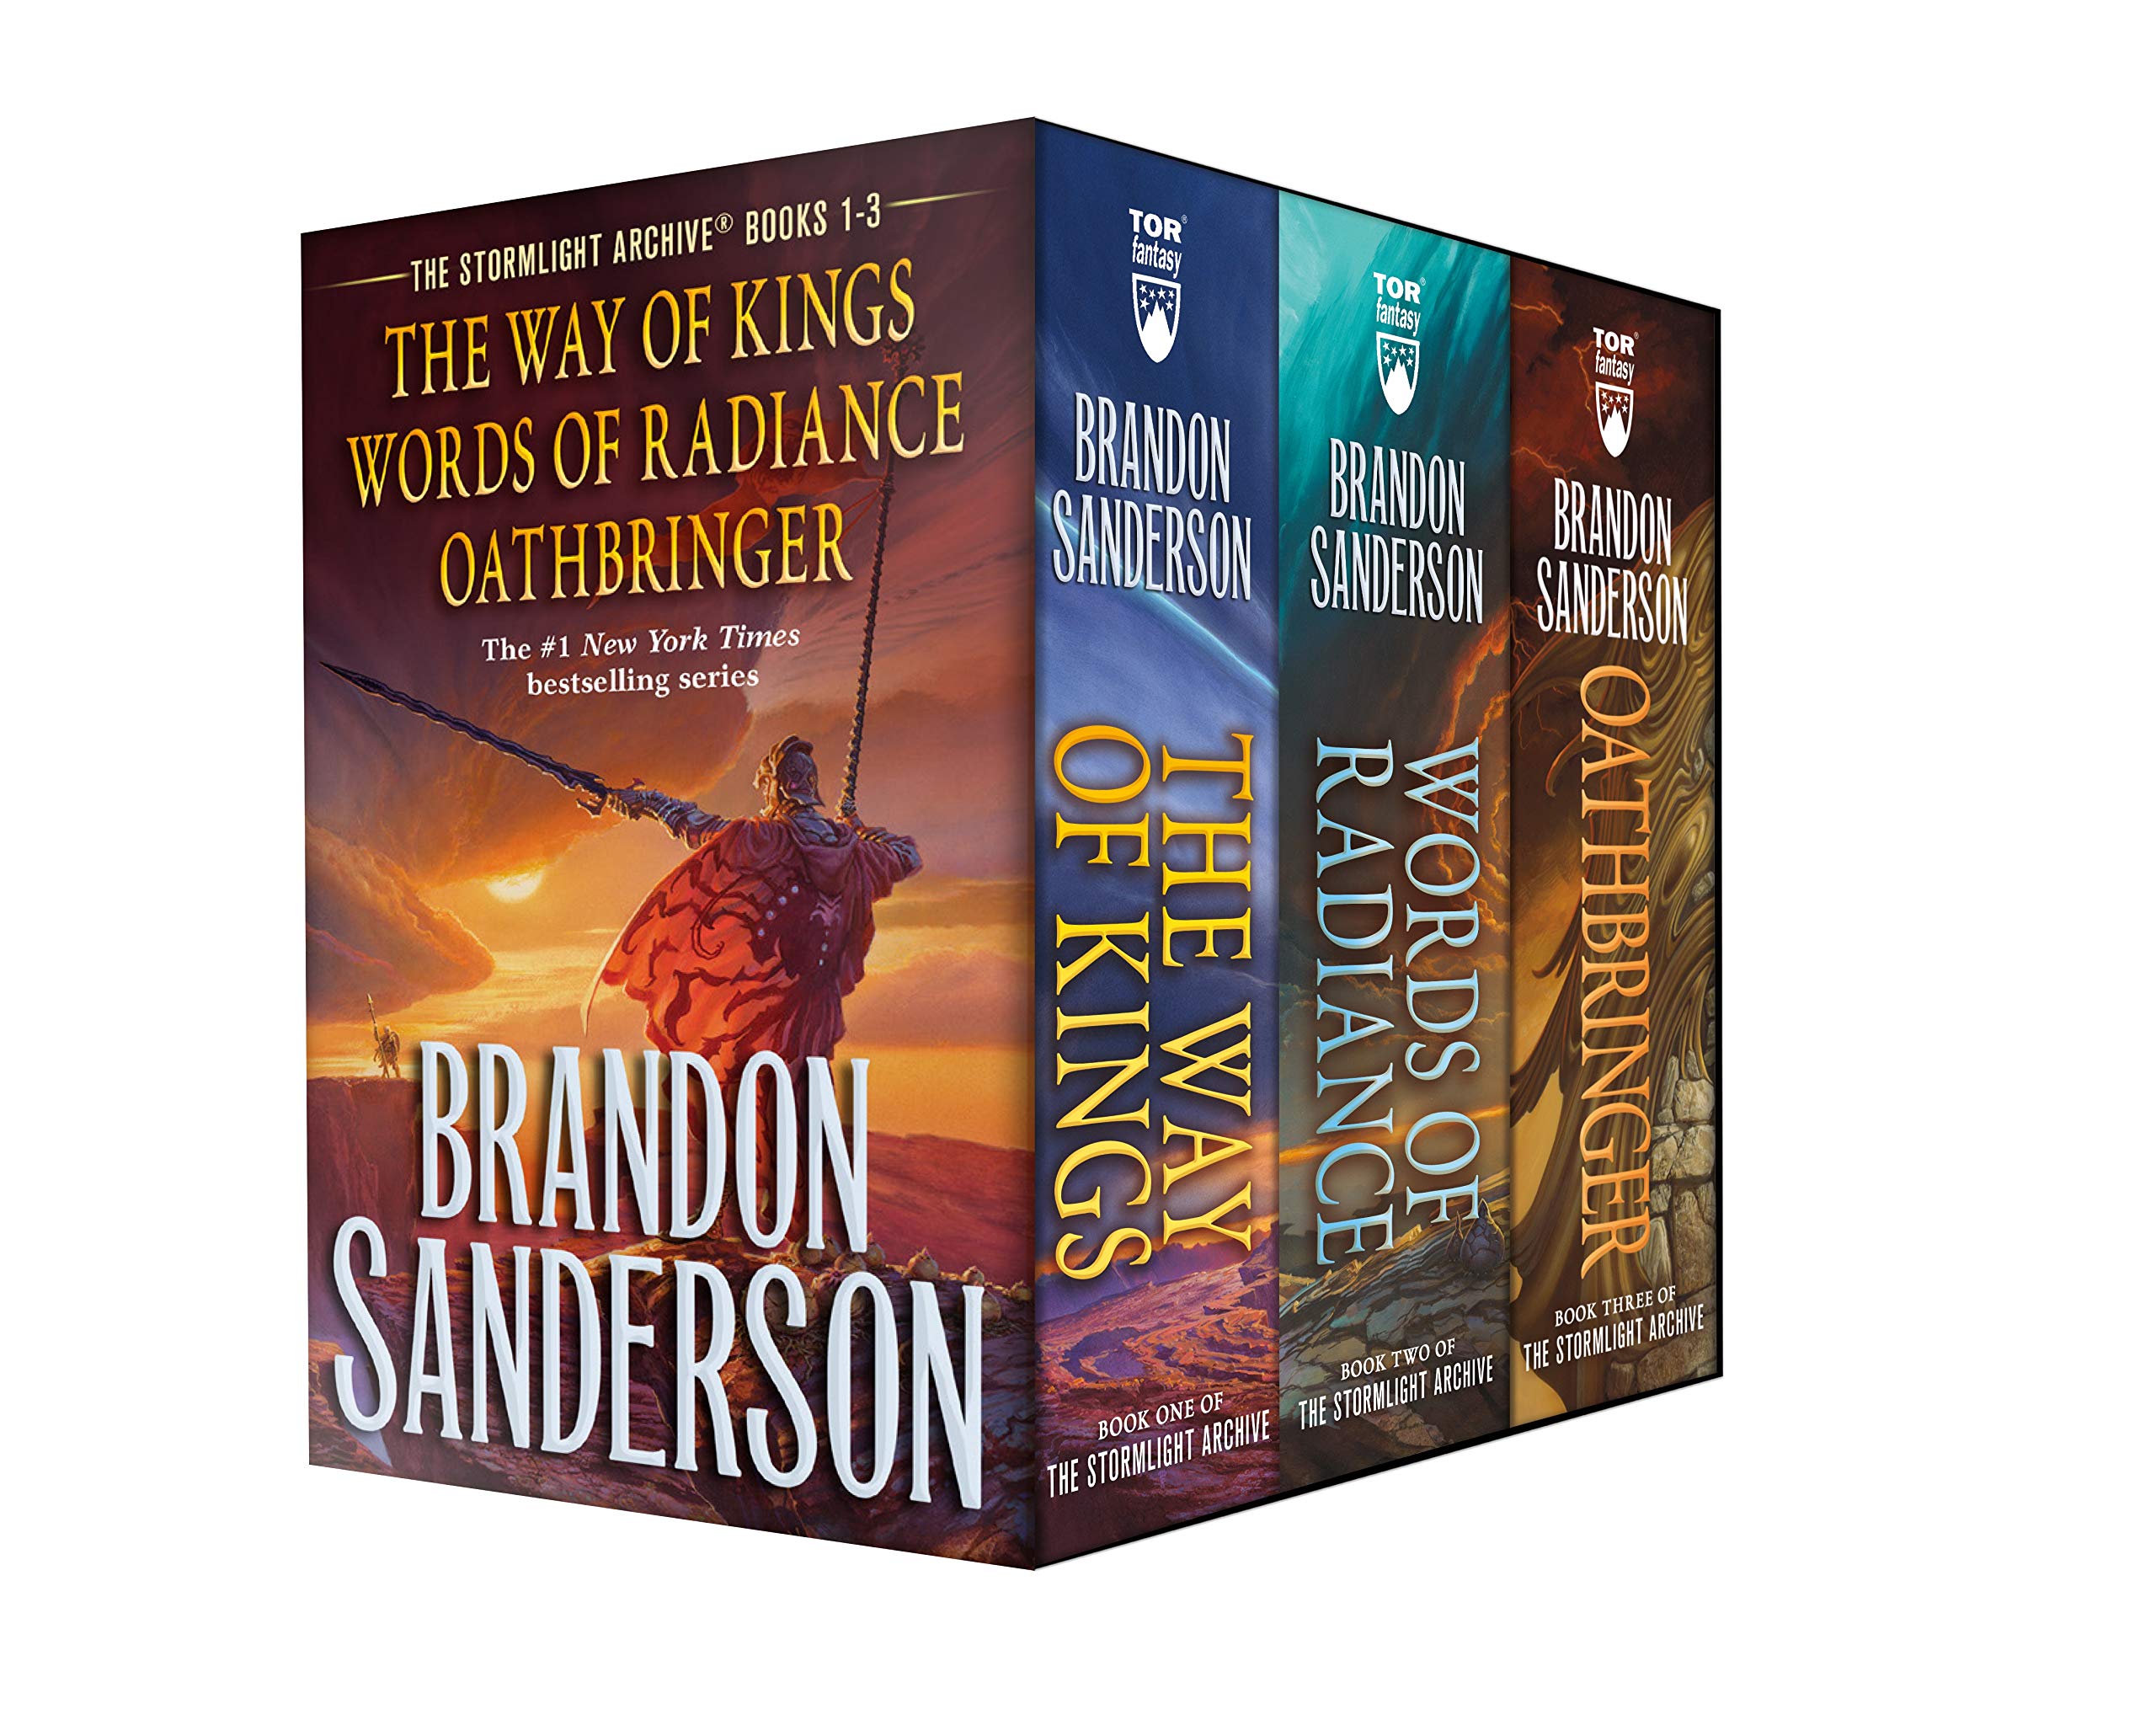 Brandon Sanderson Announces Four New Books In 2023, Including New